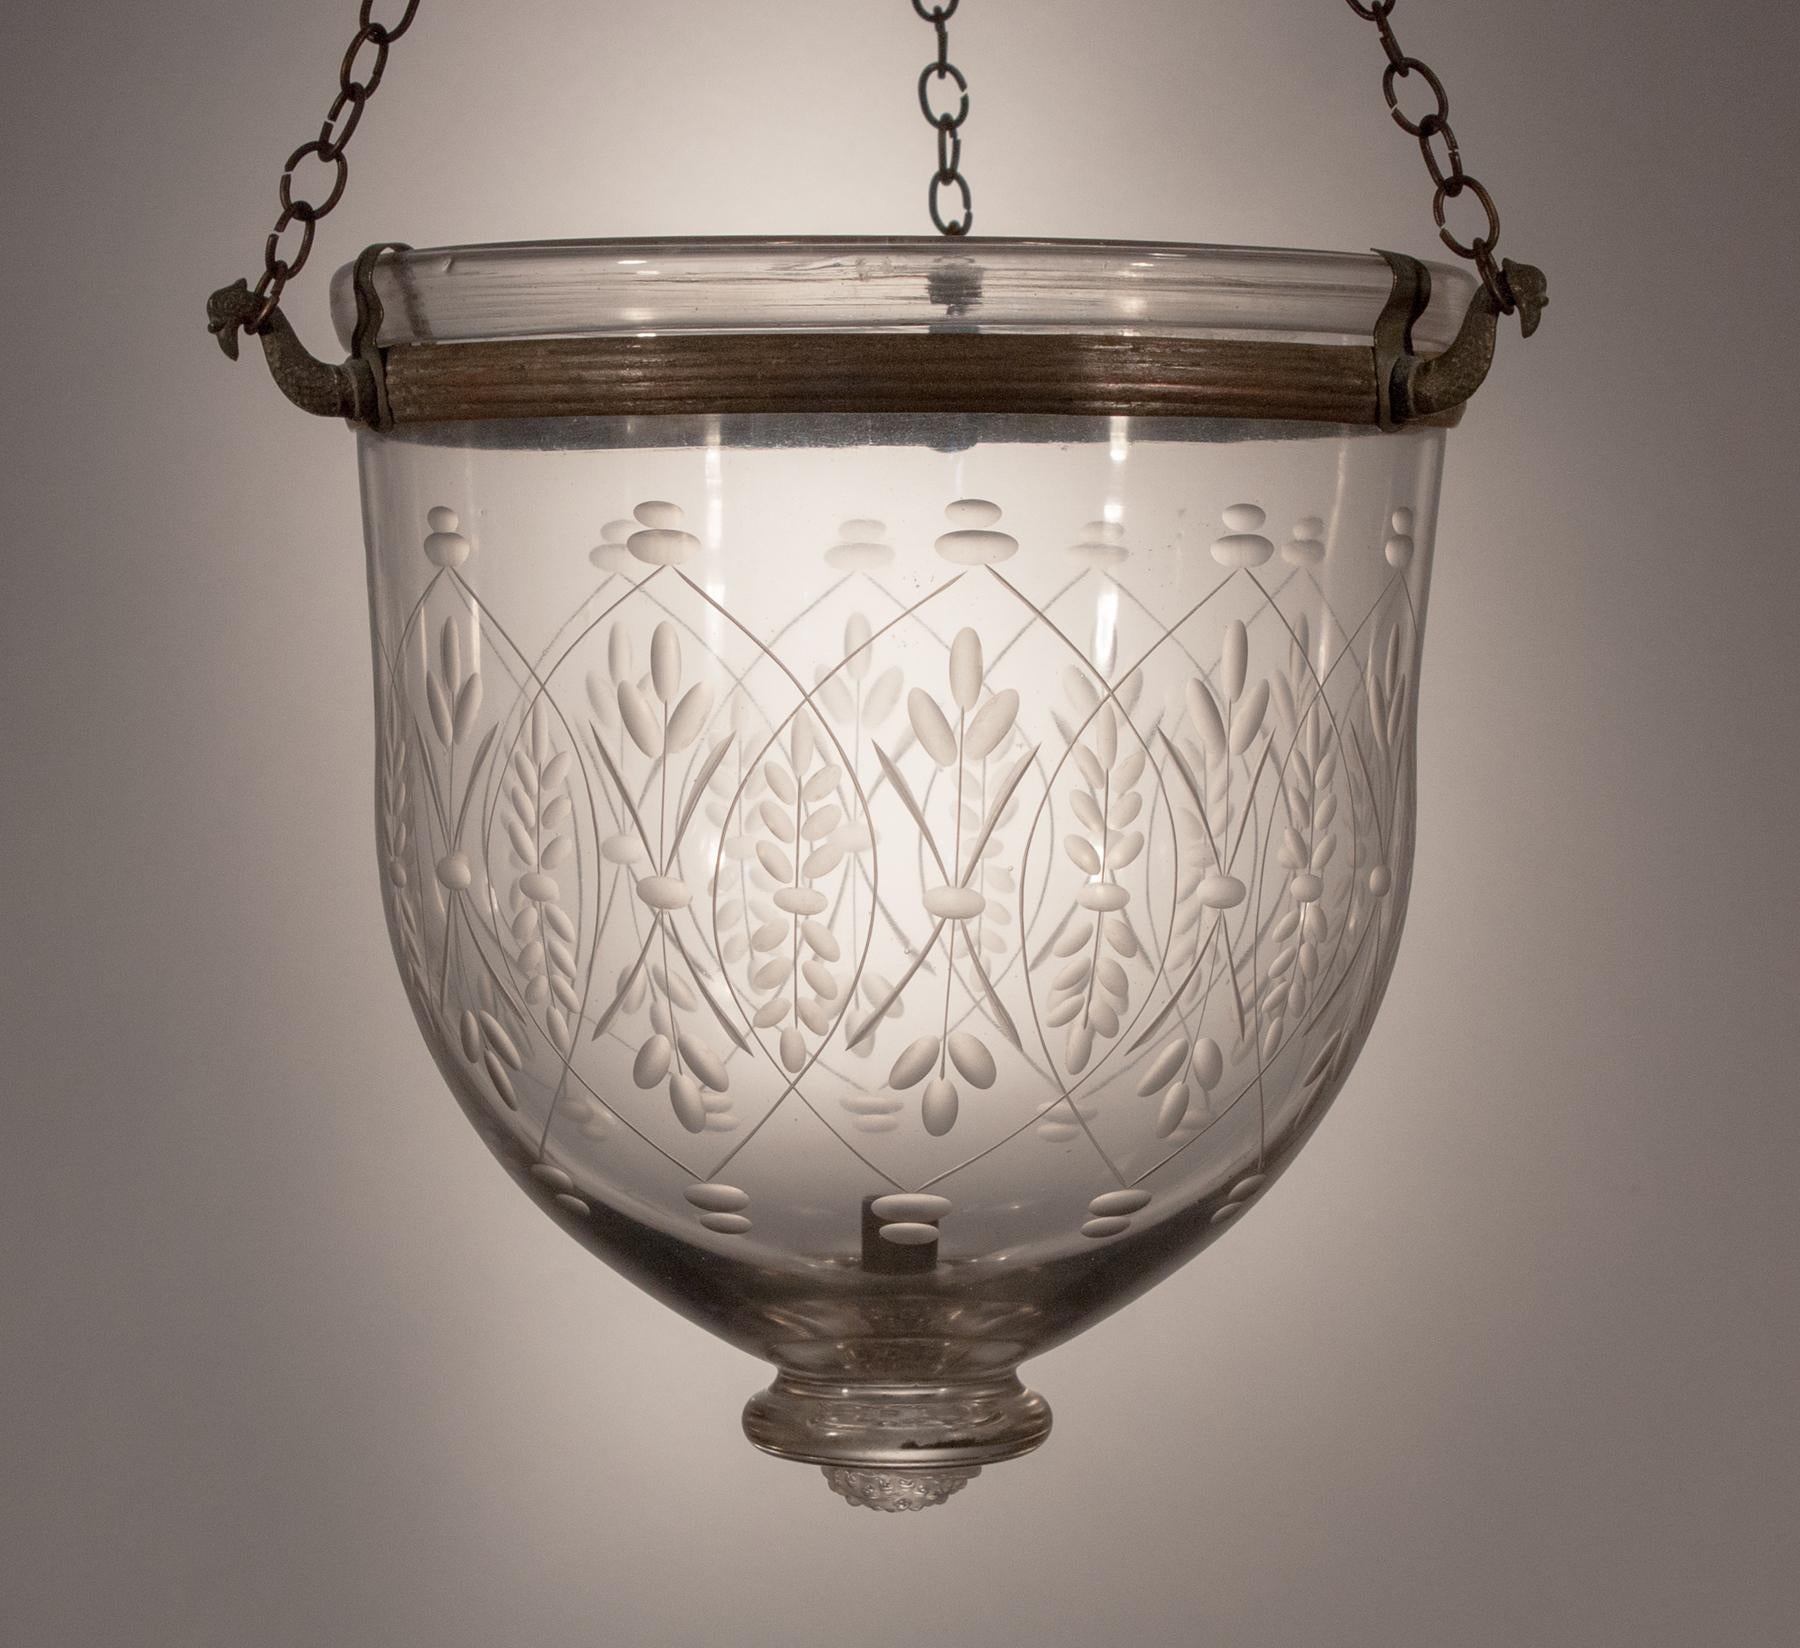 Petite Bell Jar Lantern with Wheat Etching 1